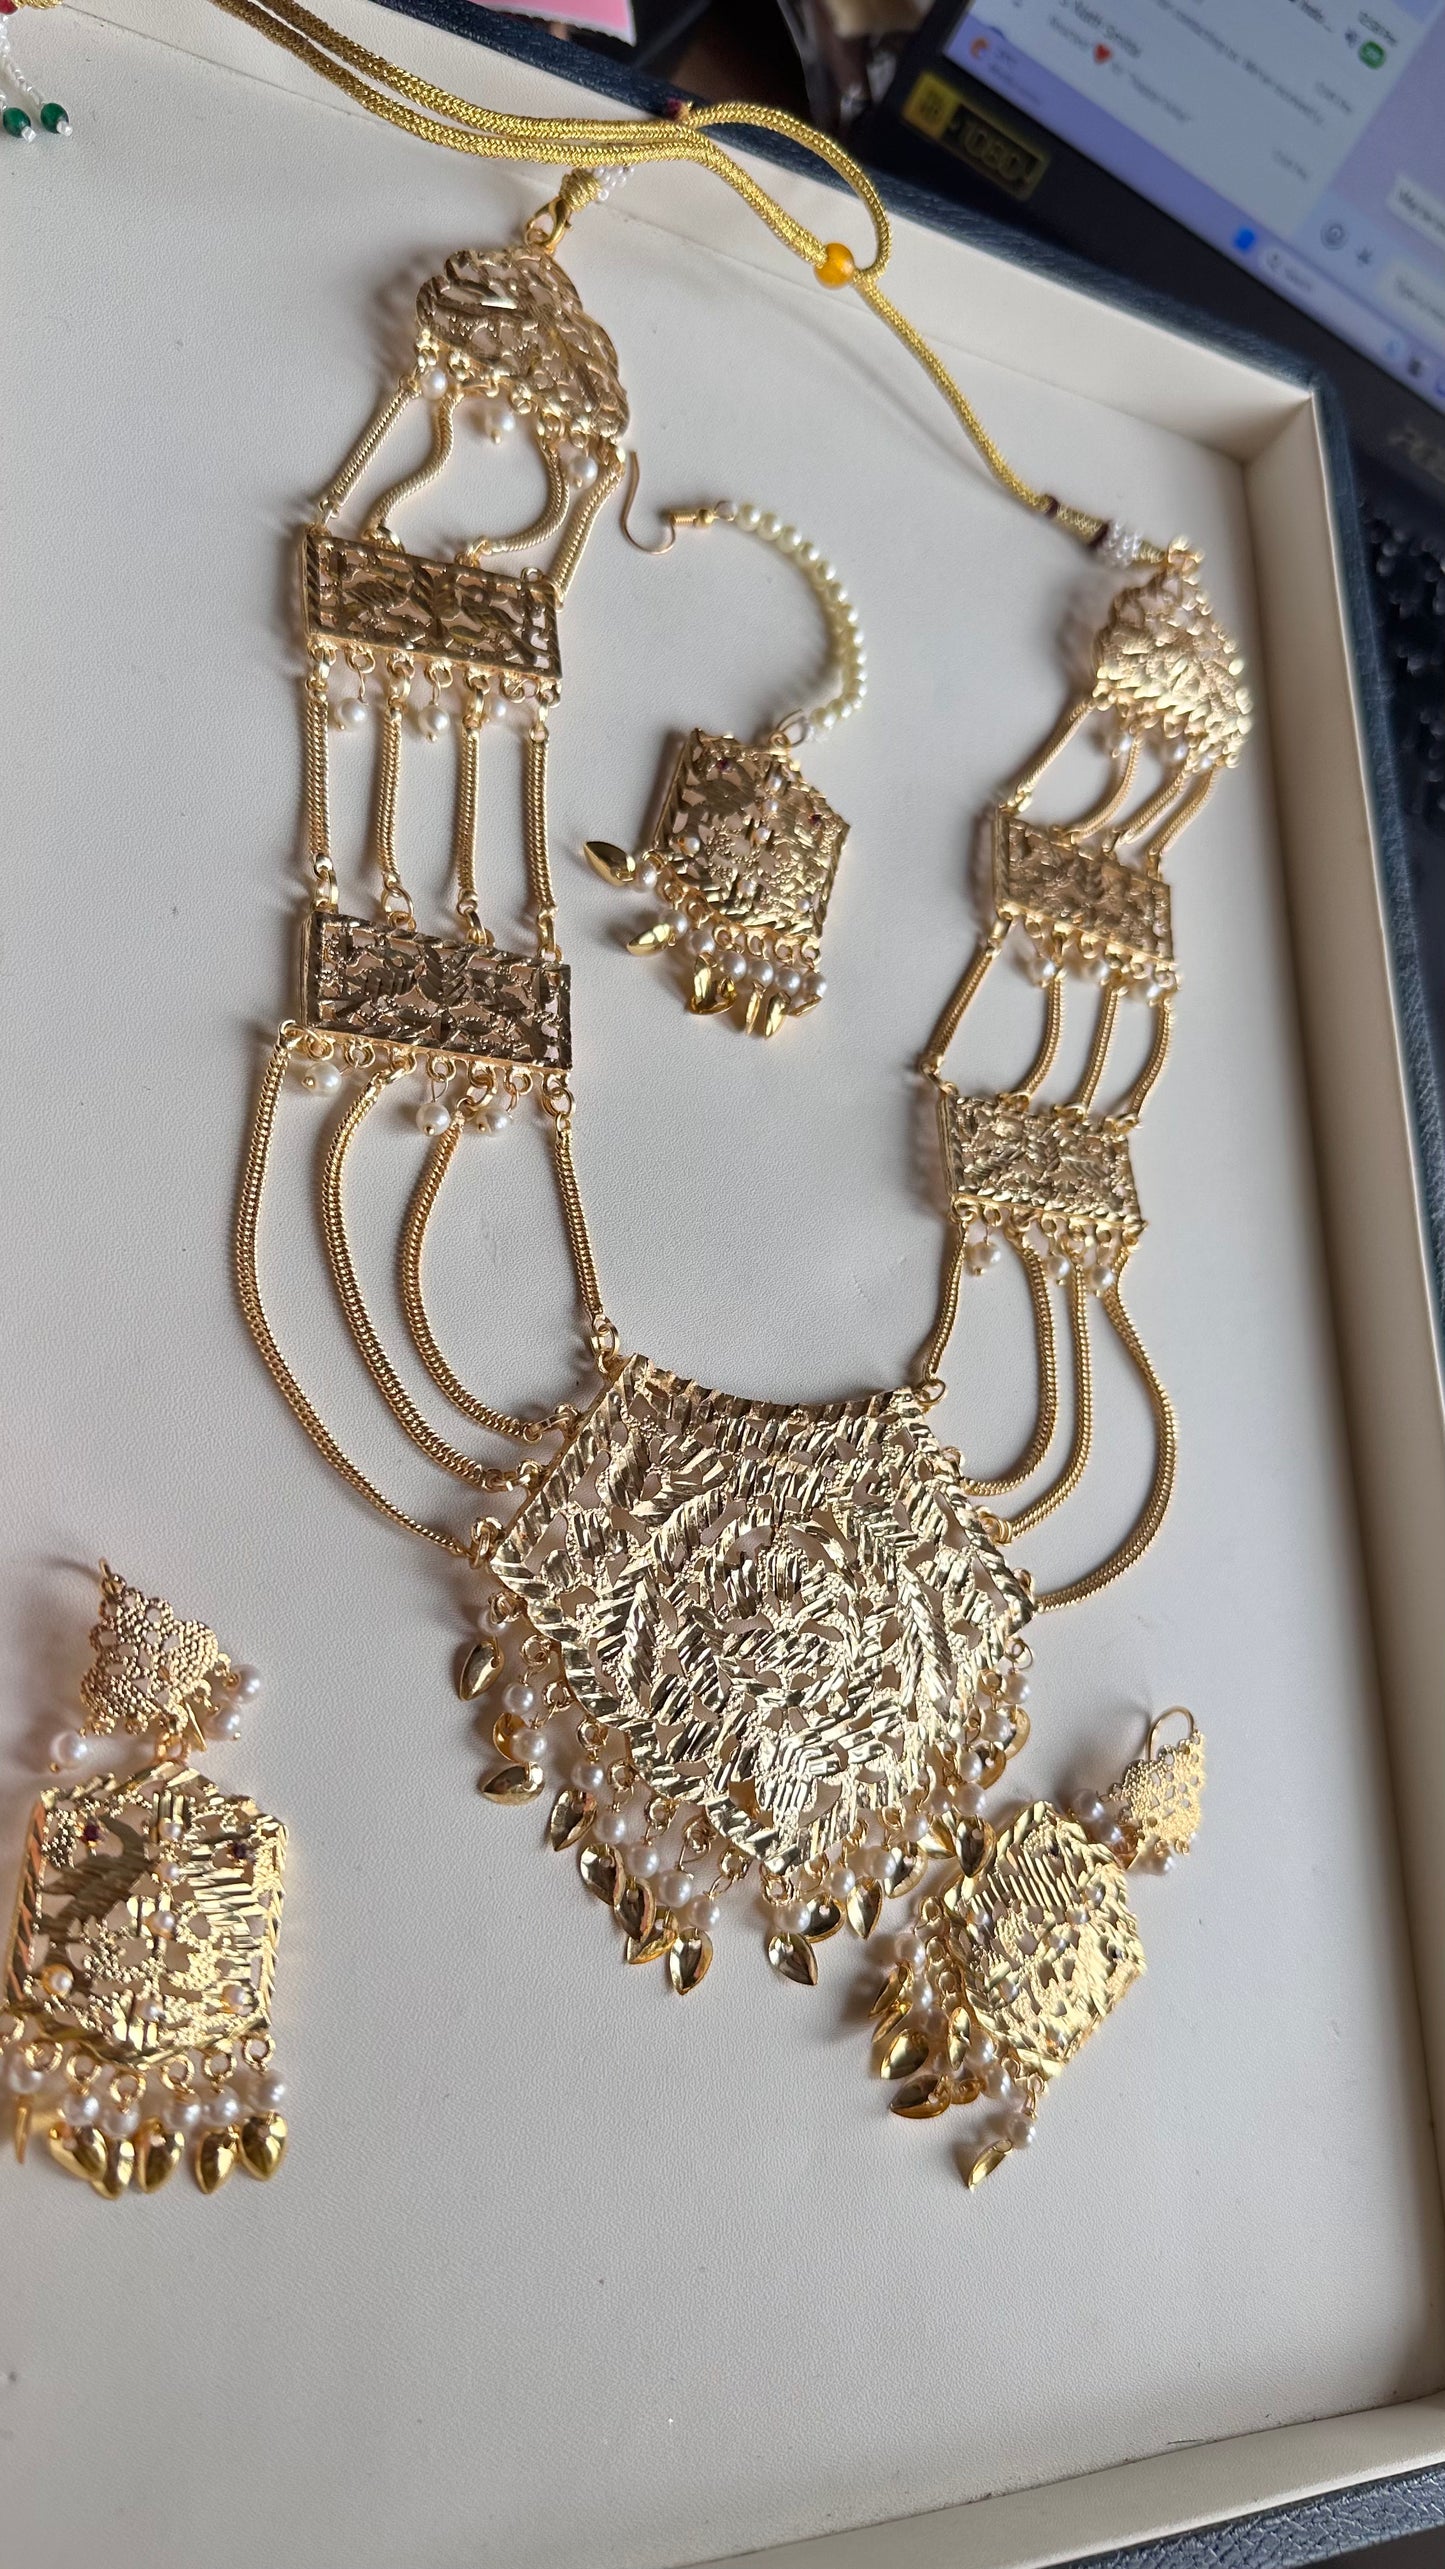 Raani haar with earrings and tikka necklace